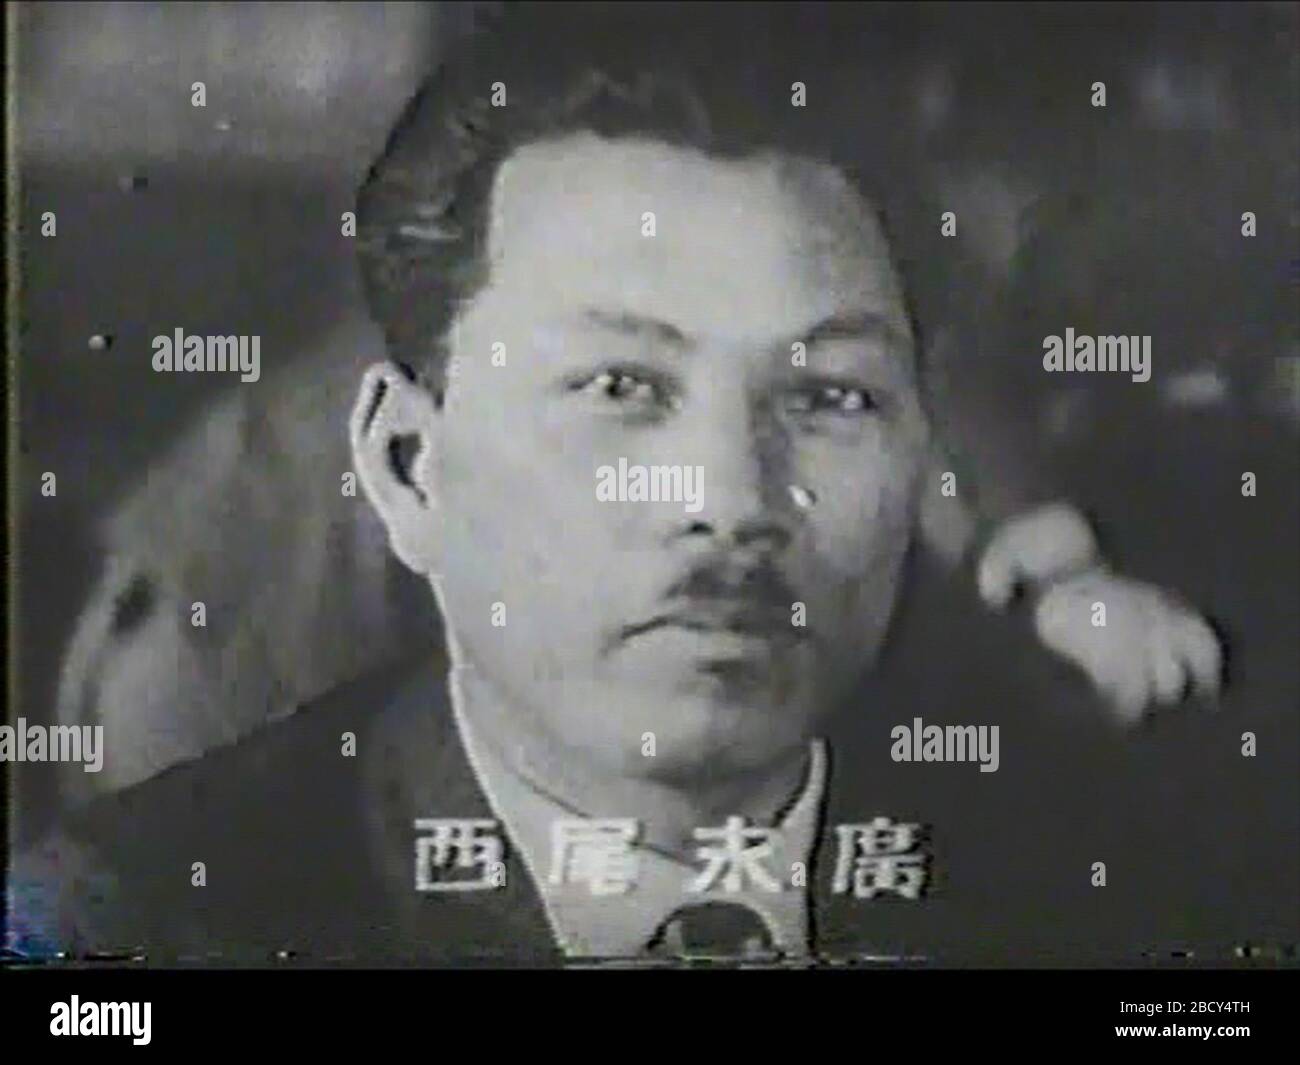 English Suehiro Nishio From A Japanese Tragedy 1946 Japanese Film 日本語 映画 日本の悲劇 西尾末広 映画では 民衆の裏切者 として紹介 1946 Screenshot 日本映画社 Stock Photo Alamy